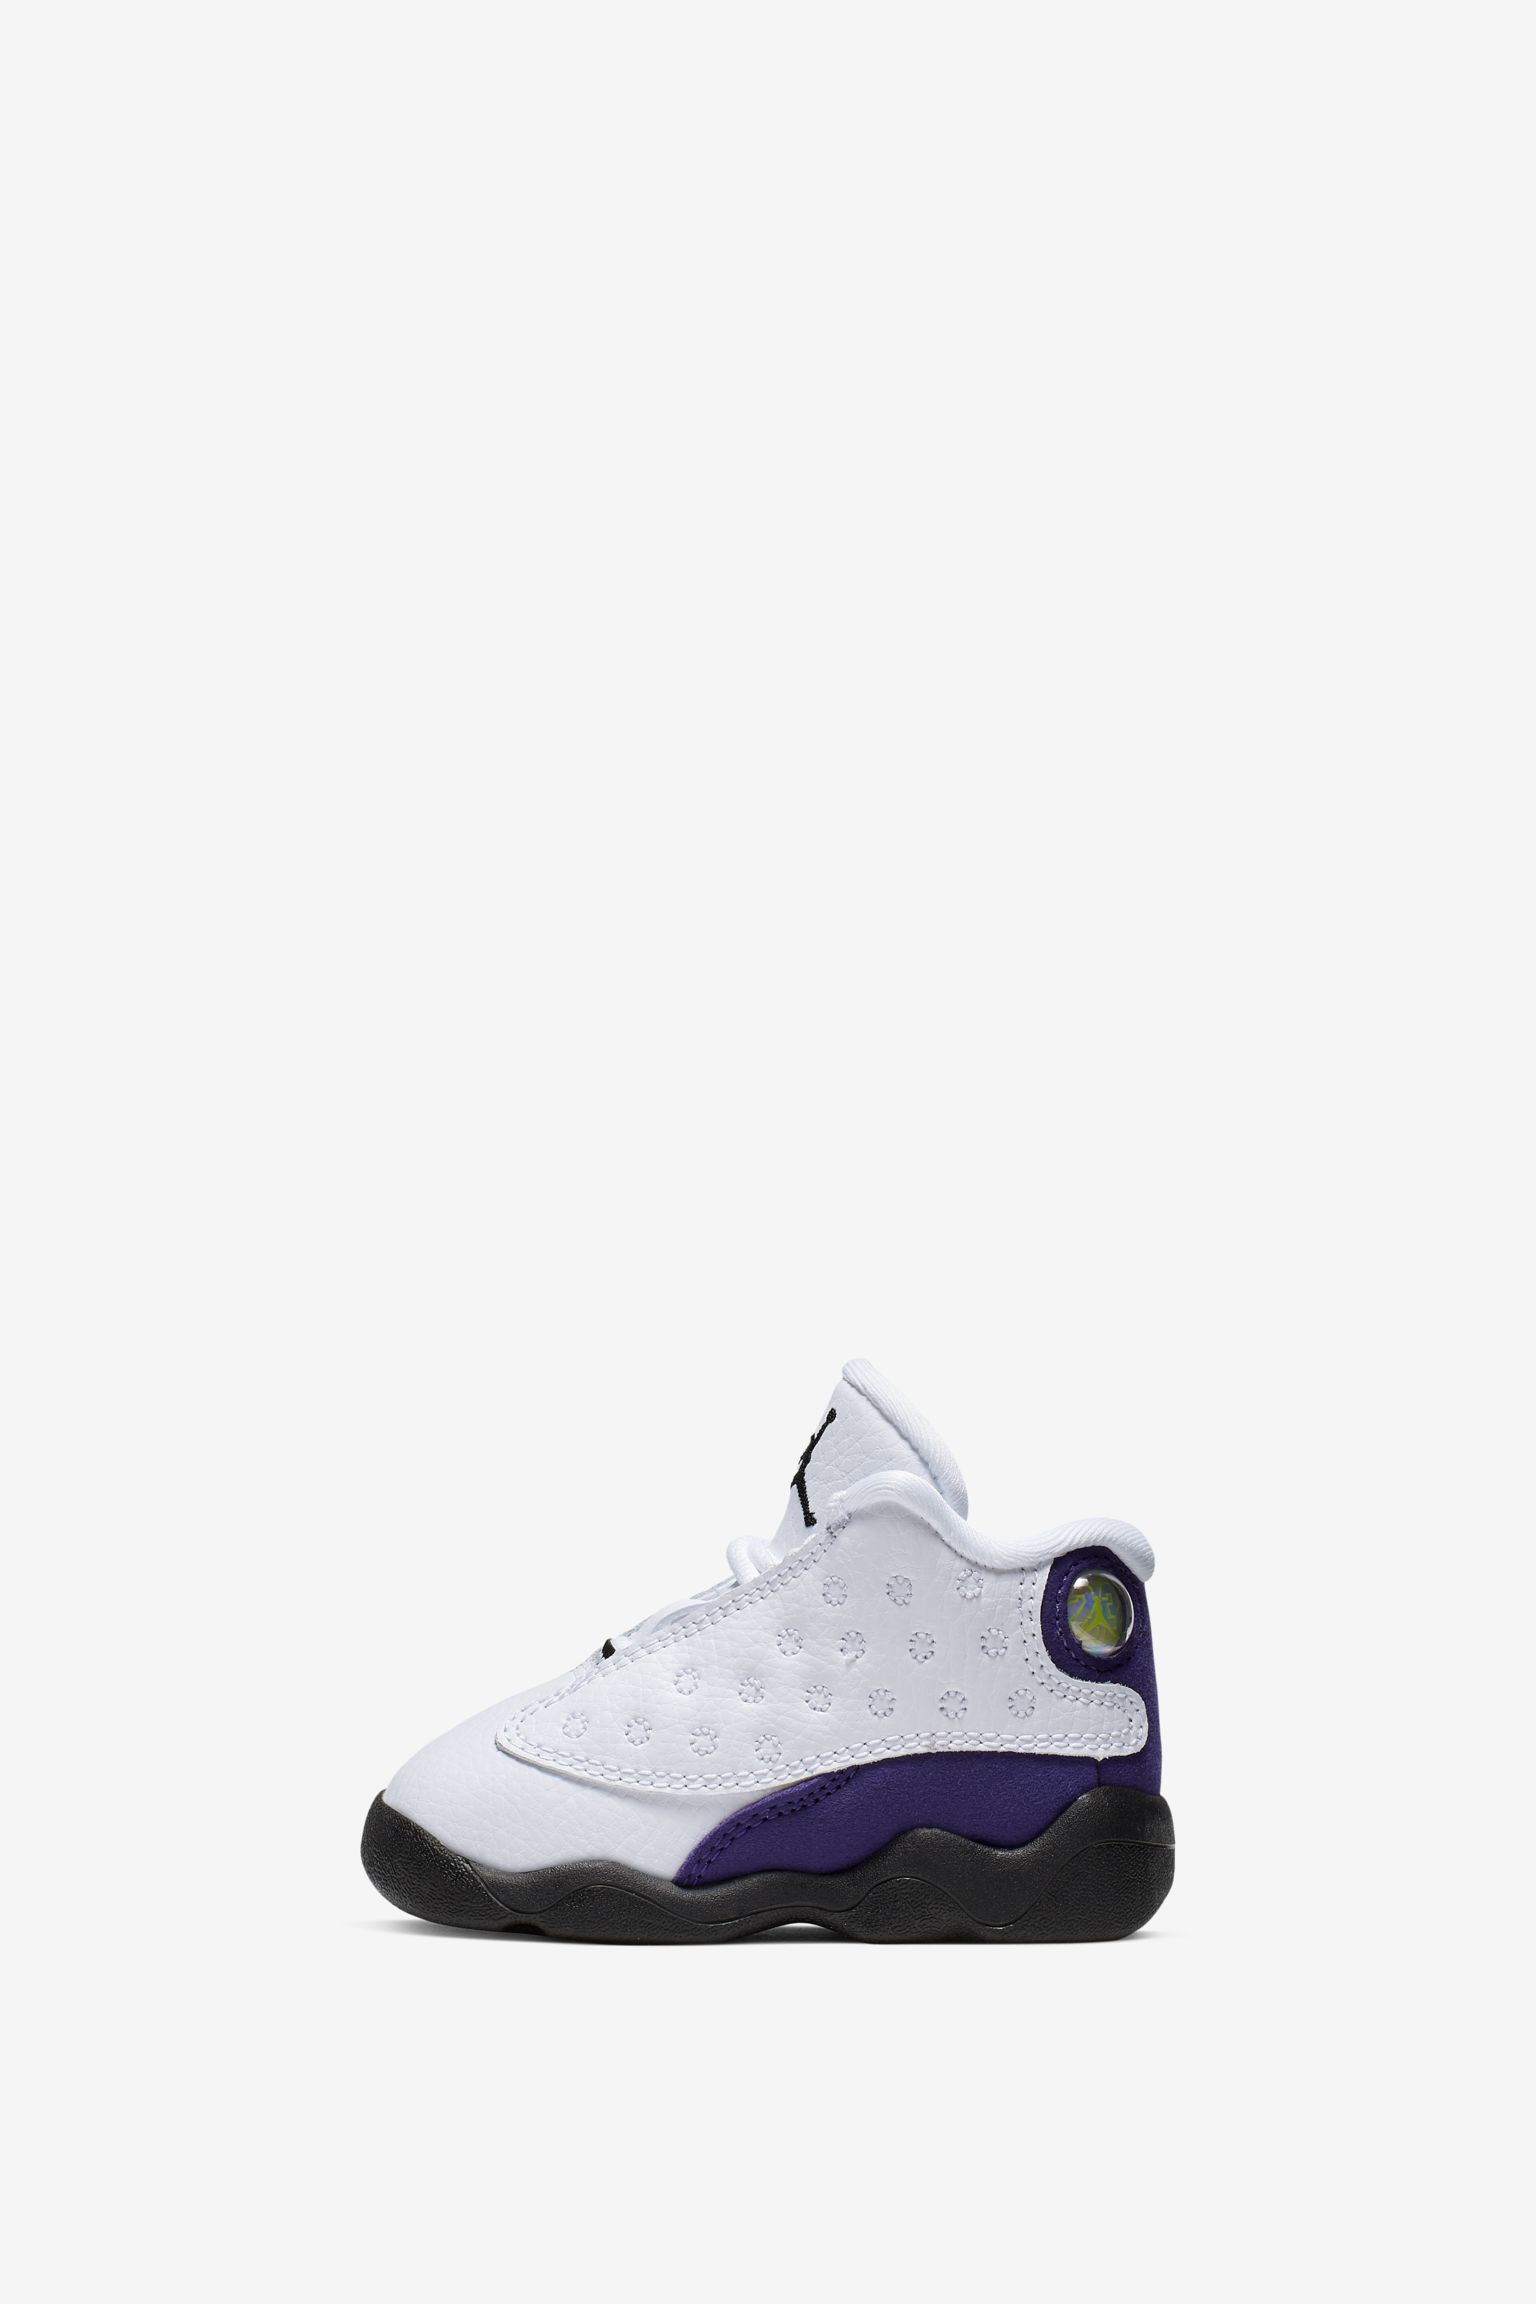 jordan 13 white black court purple